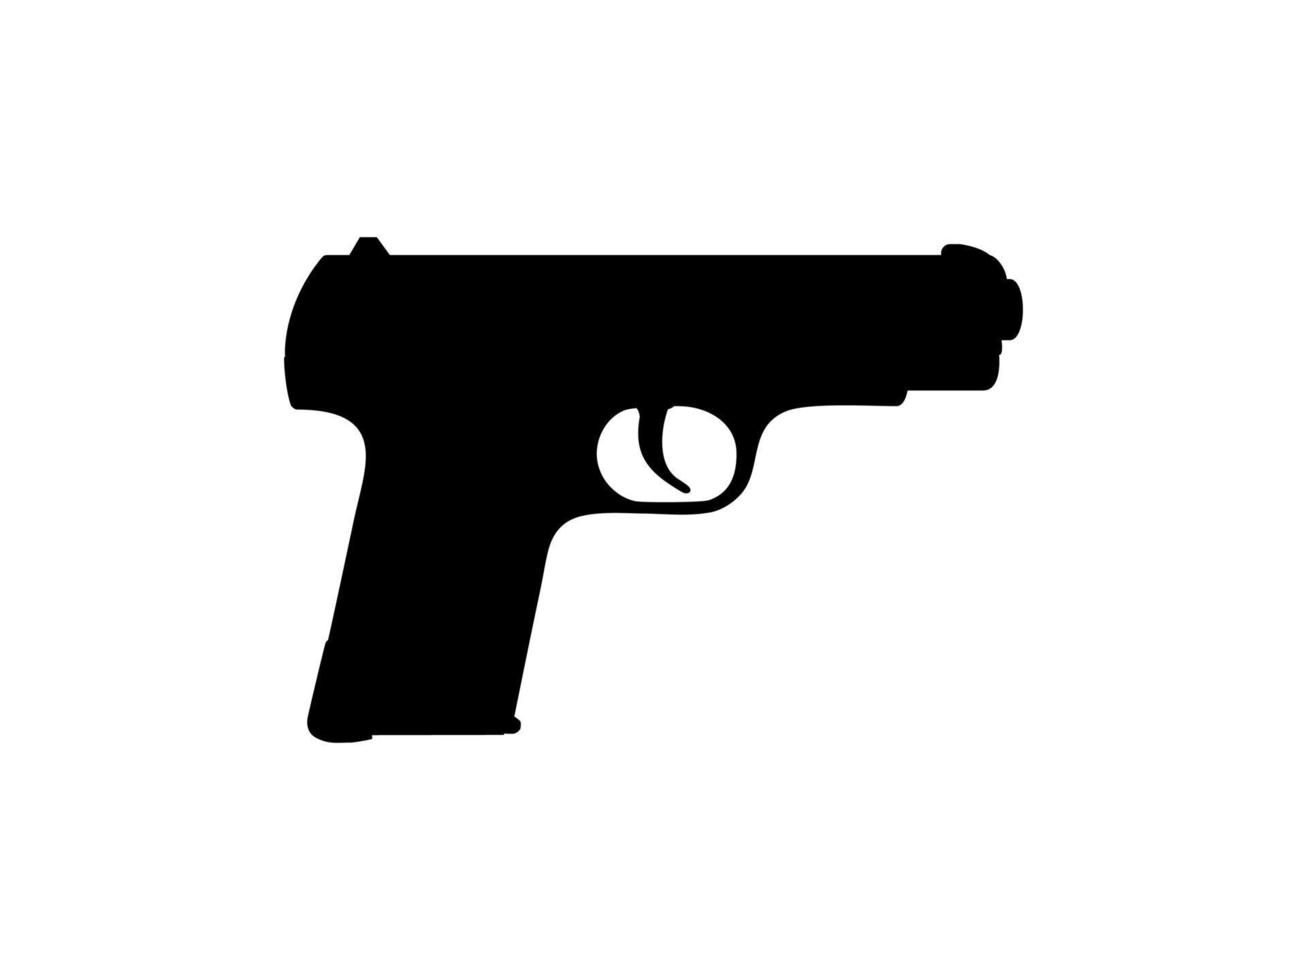 pistola de pistola de silueta para ilustración de arte, logotipo, pictograma, sitio web o elemento de diseño gráfico. ilustración vectorial vector